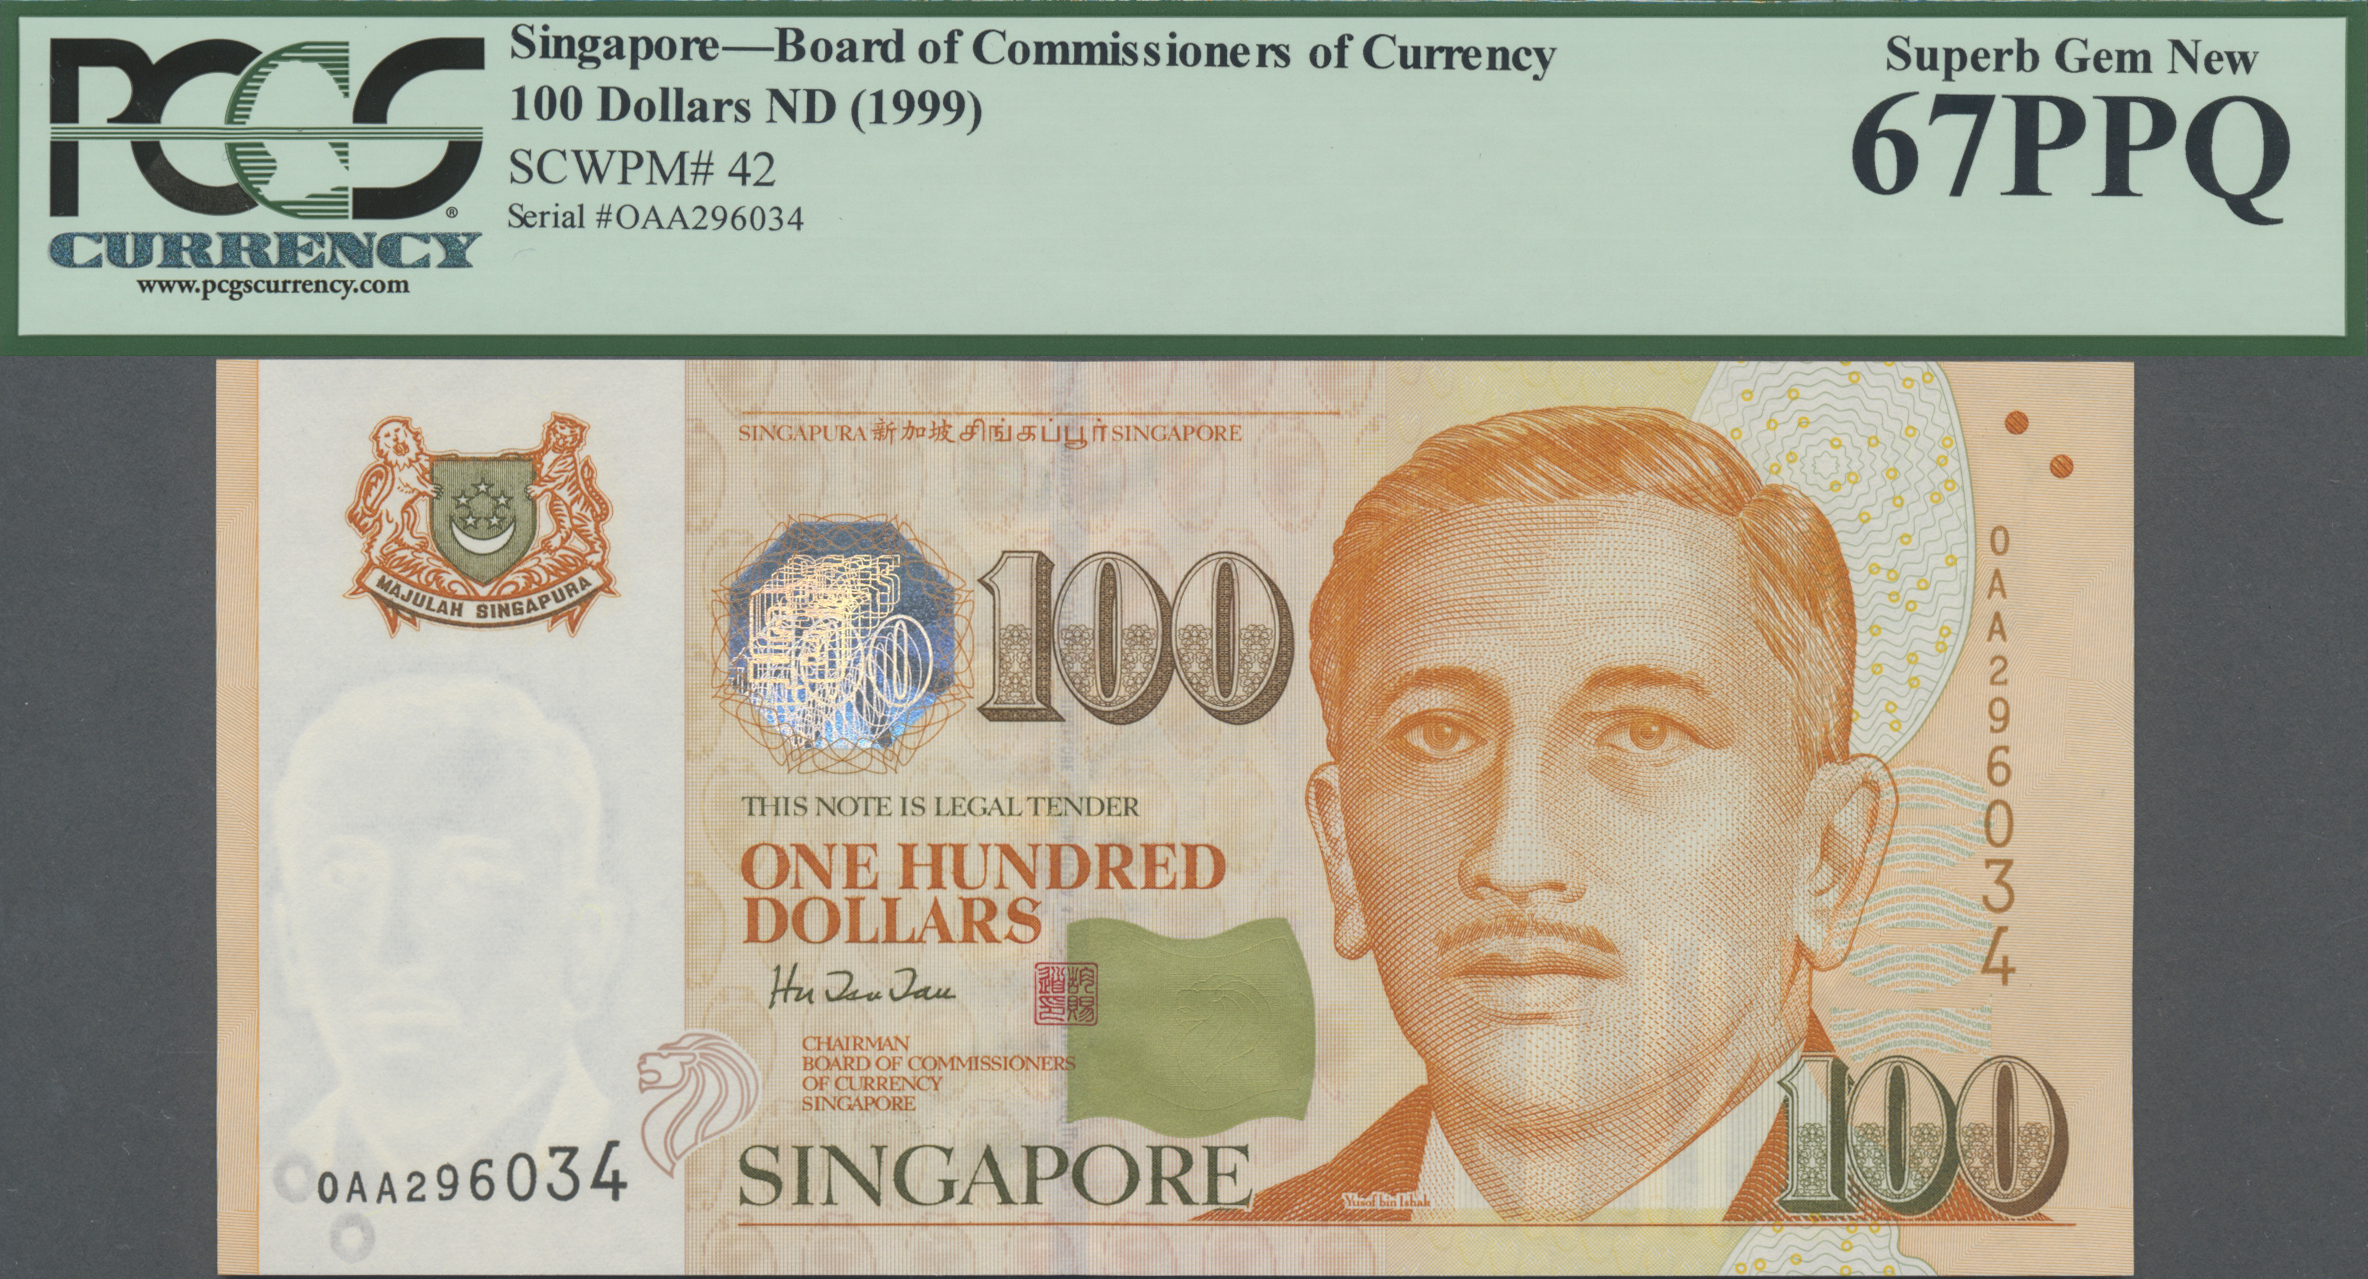 SINGAPORE SET 2 PCS OF 1 DOLLAR P 9 18 UNC